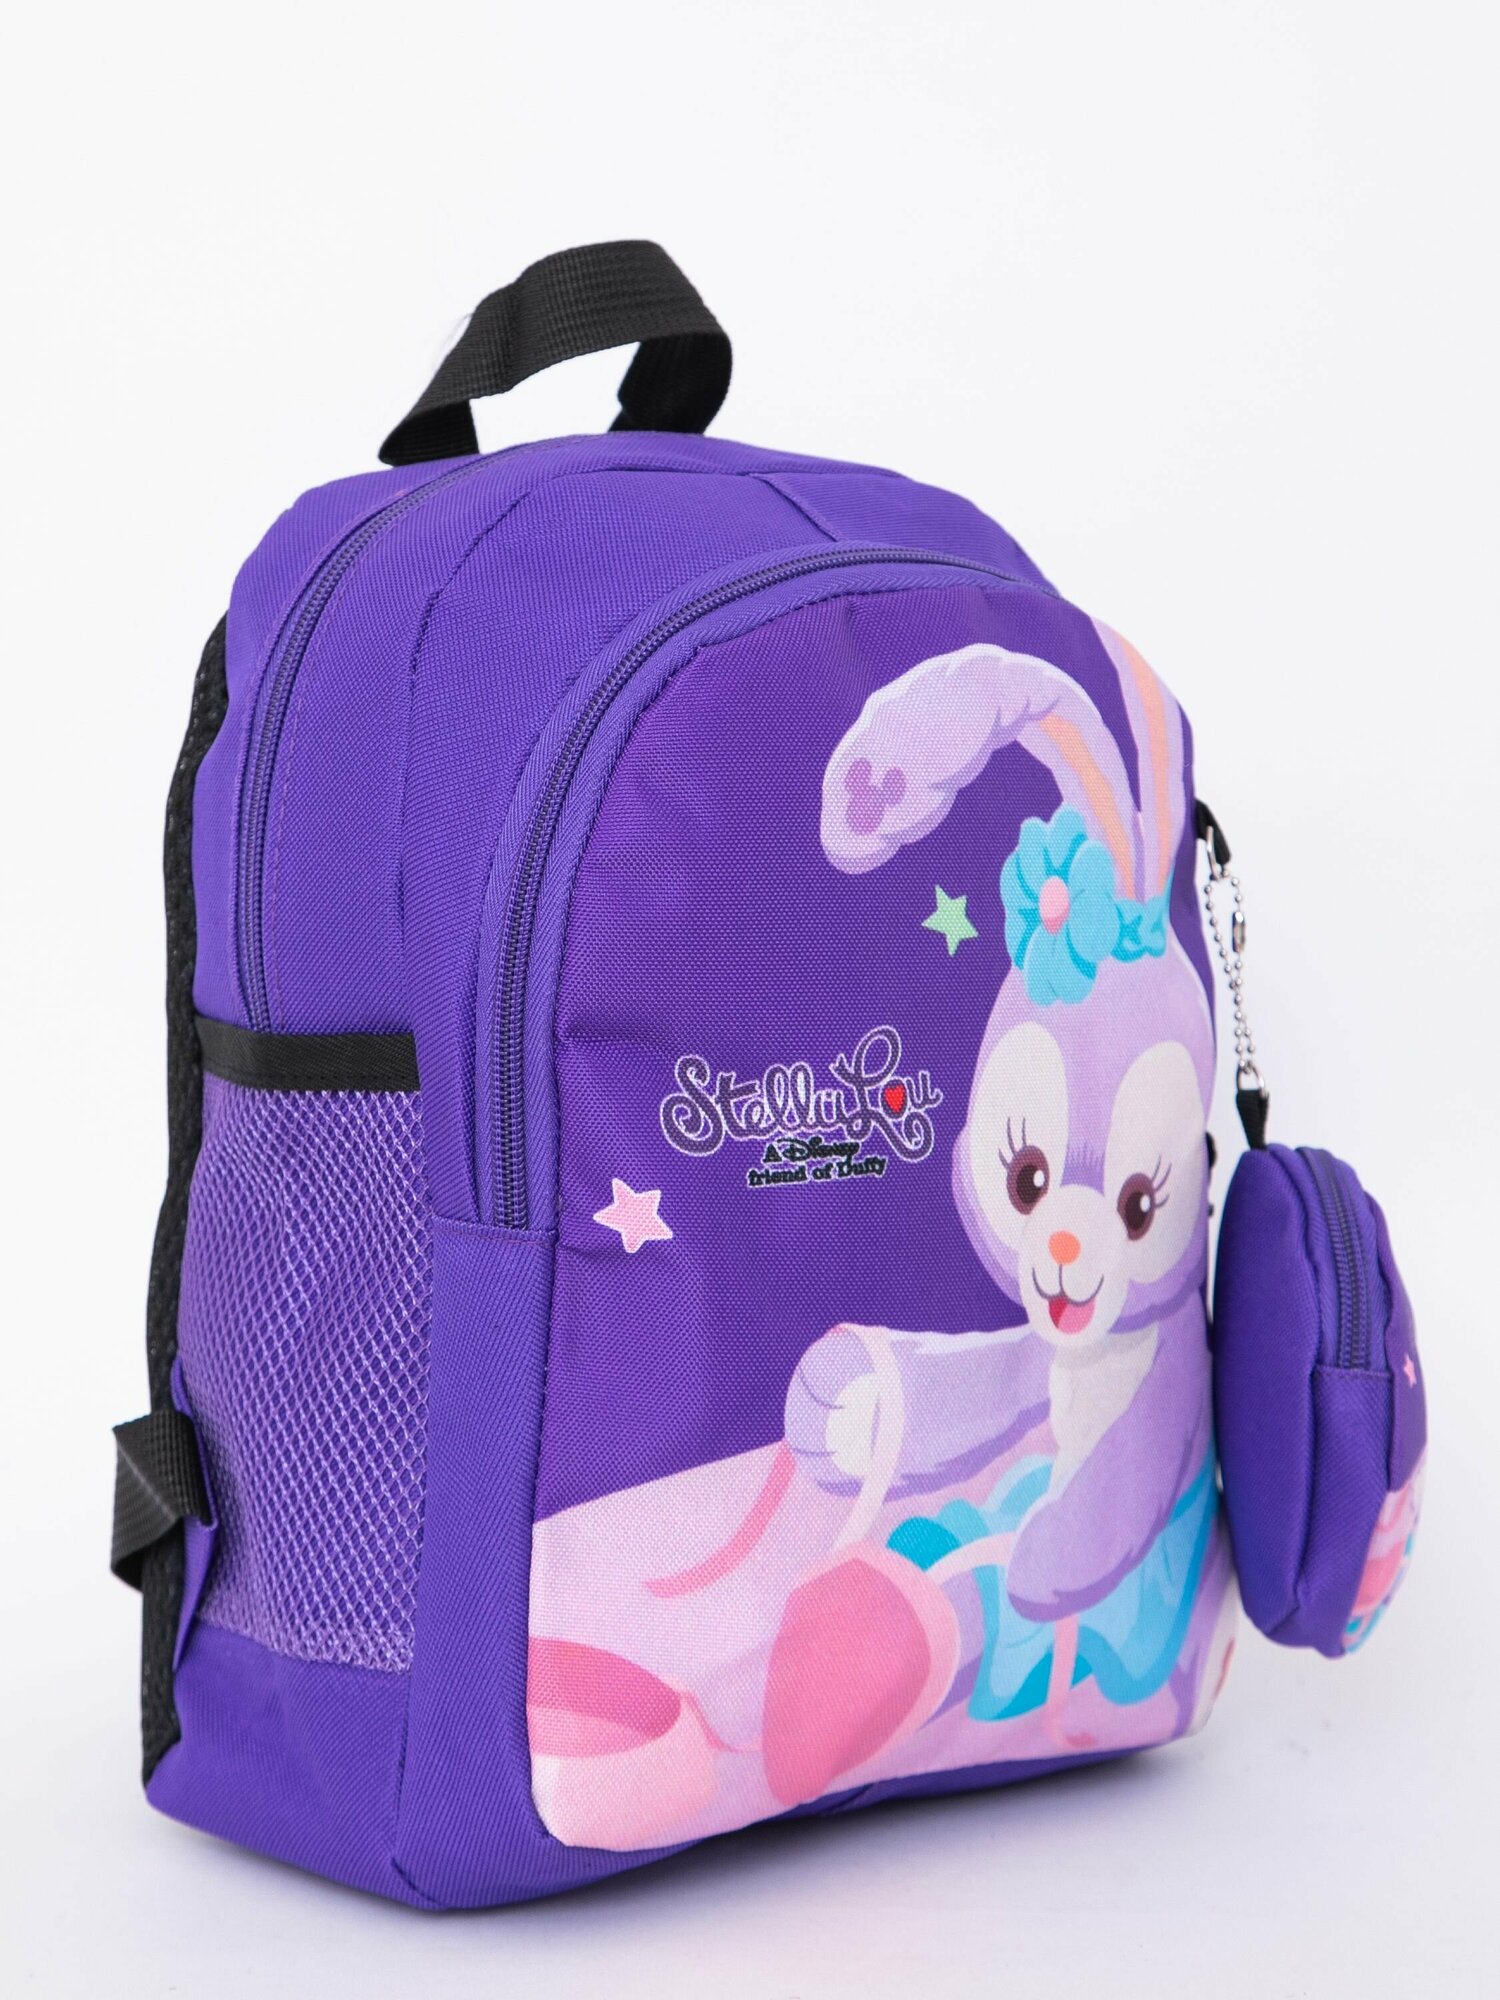 Рюкзак детский, рюкзак для детей, рюкзак для девочки, рюкзак прогулочный, рюкзак повседневный, рюкзак дошкольный, рюкзак для садика.(зайка/сиреневый)